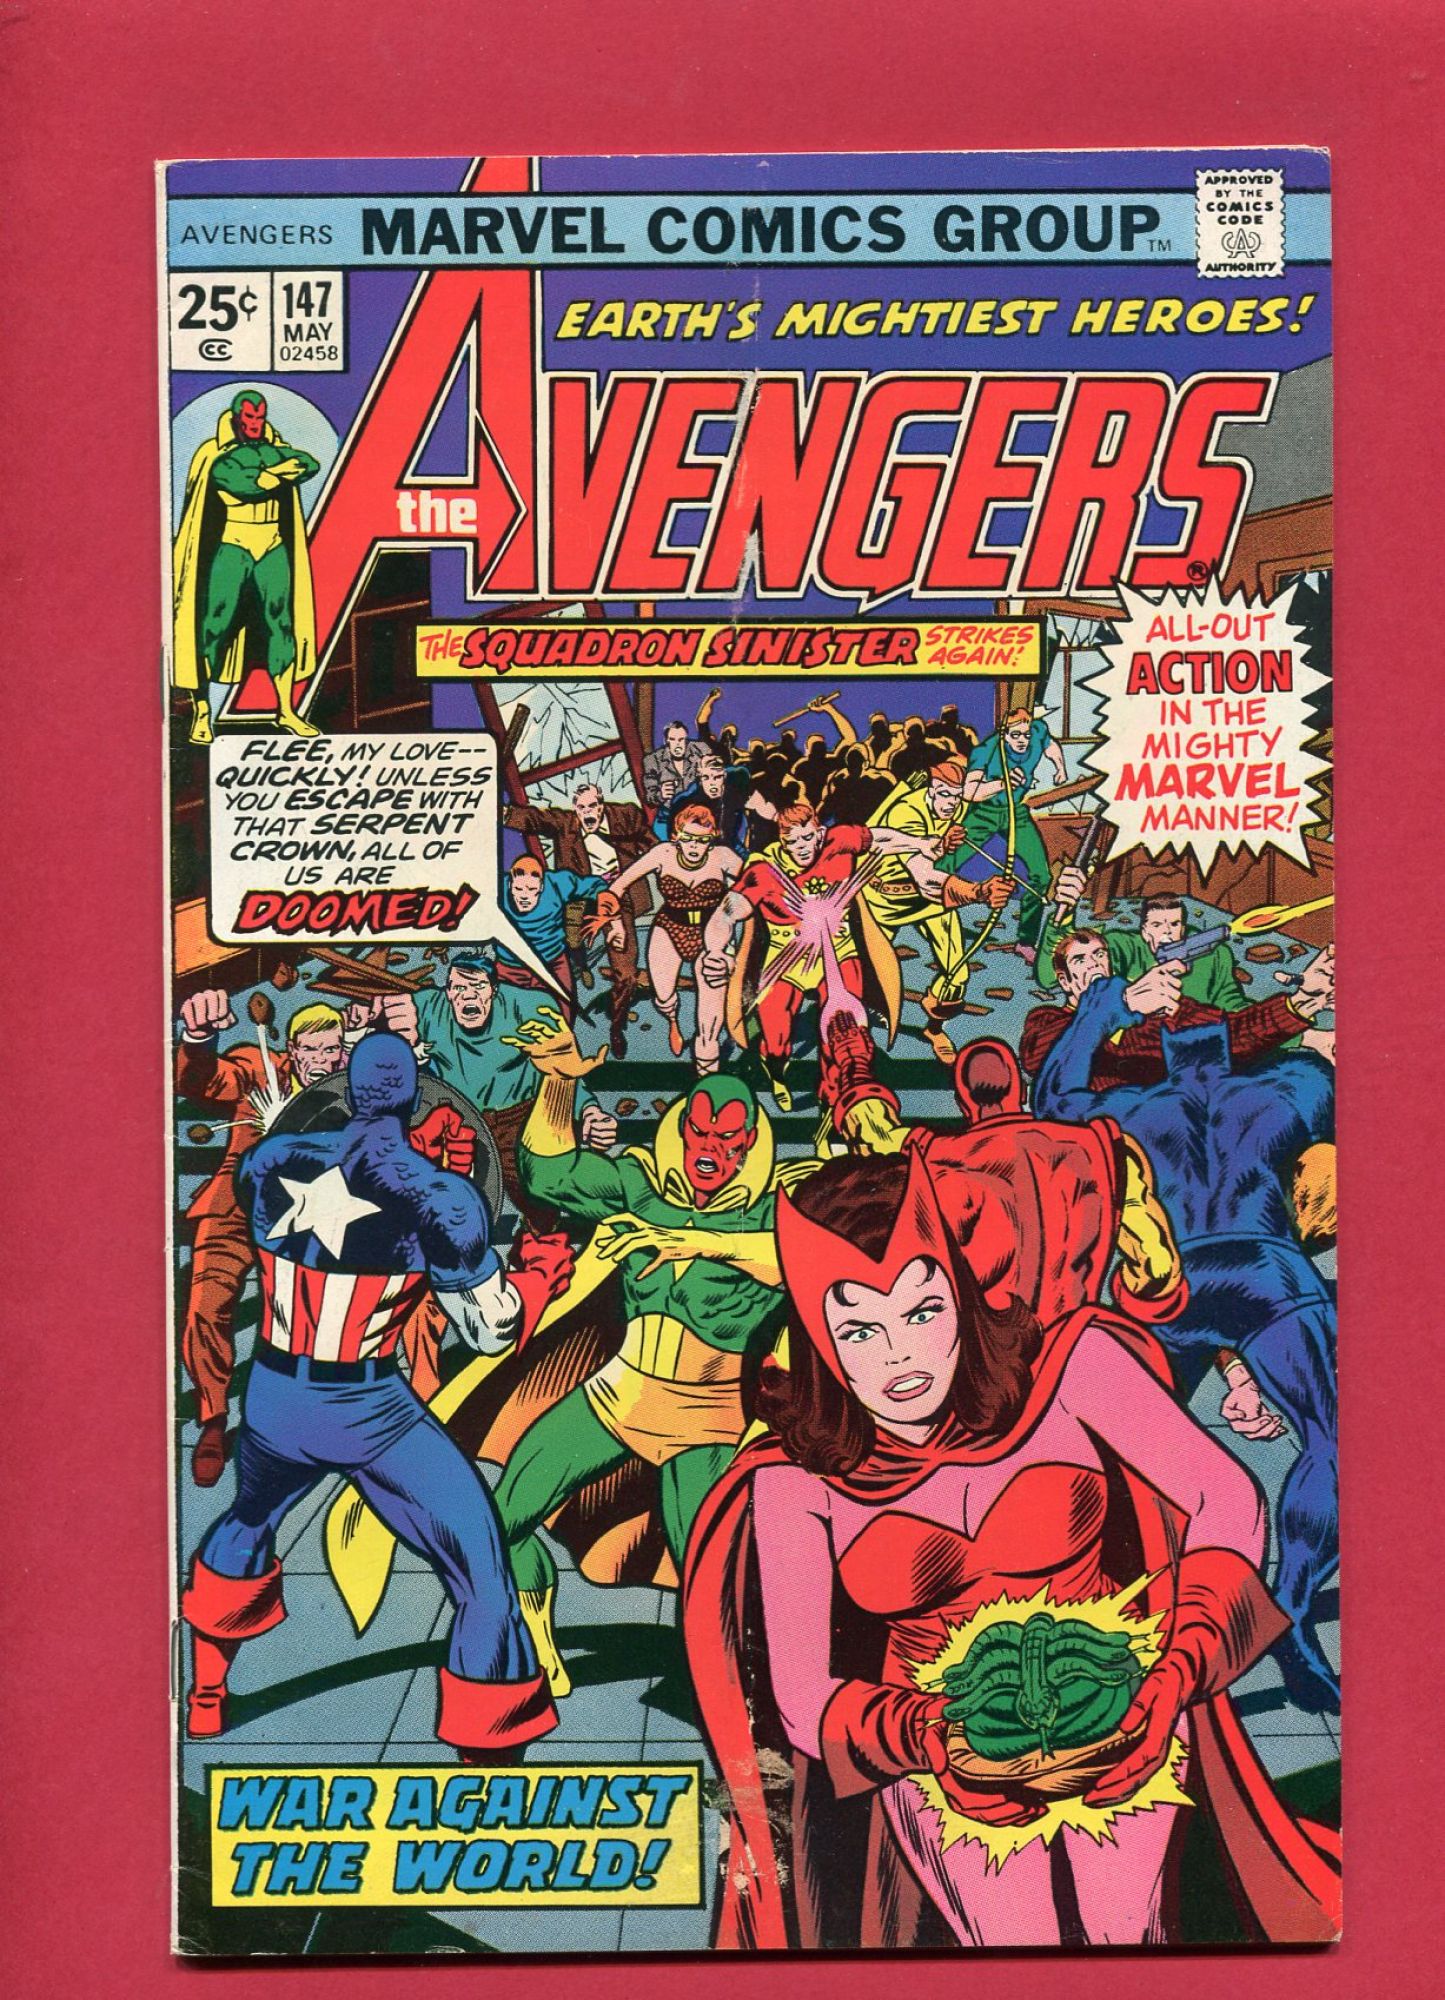 Avengers #147, May 1976, 5.5 FN-